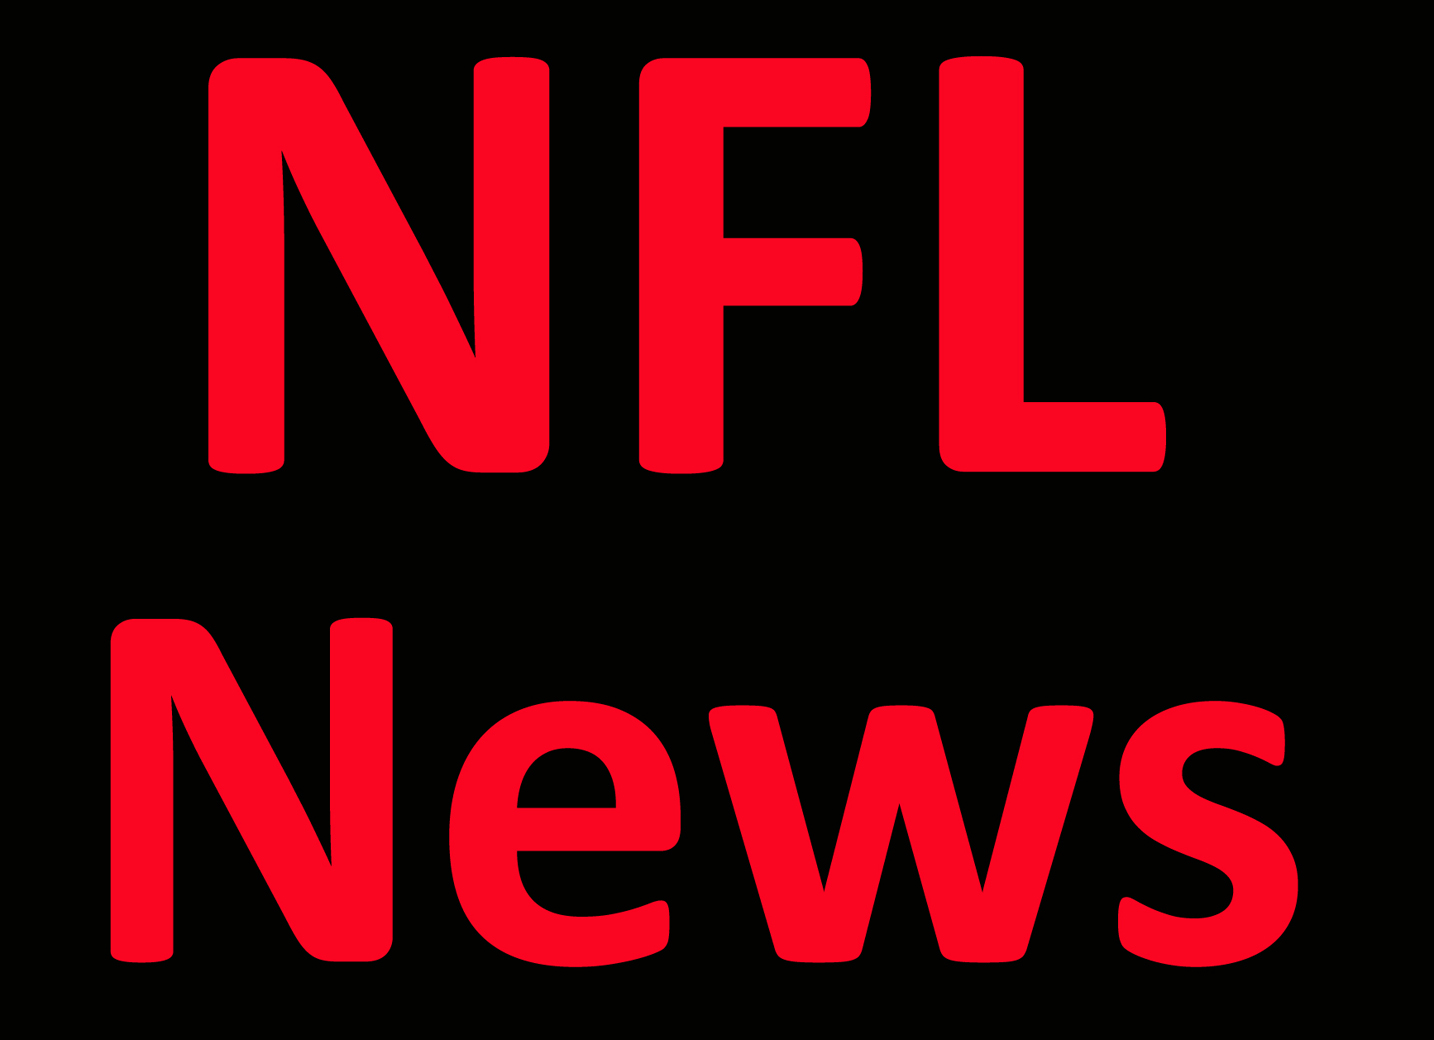 NFL News: New Orleans Saints show off new black helmet design for upcoming season Per Report